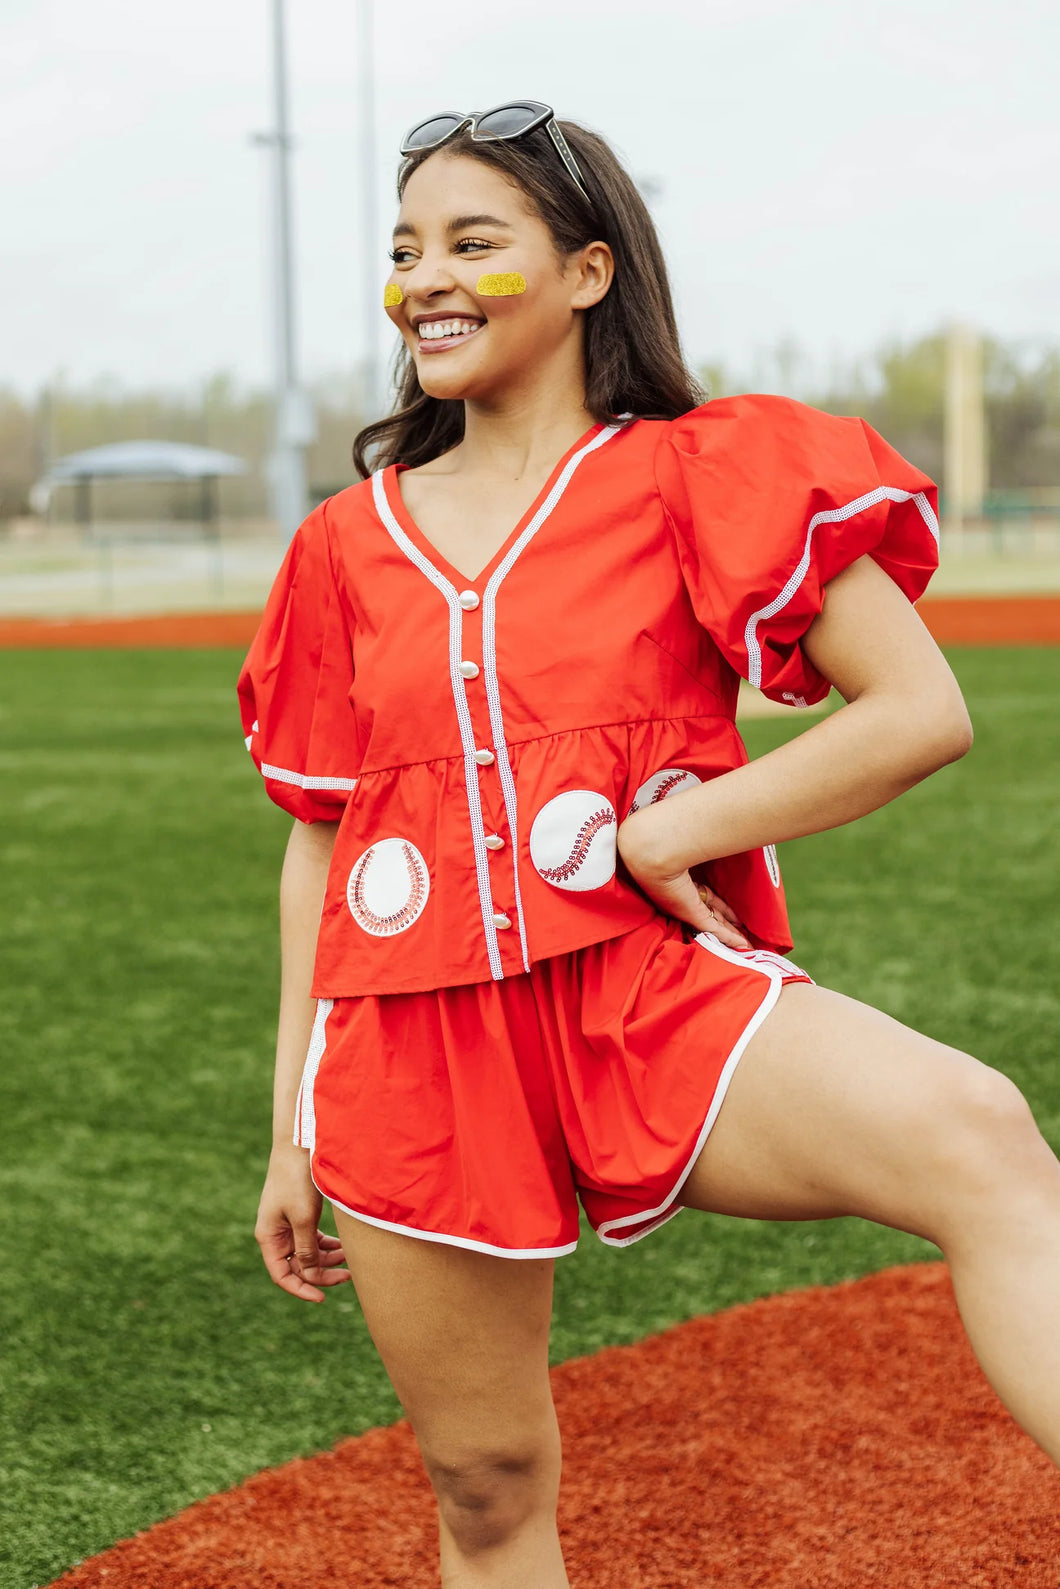 Queen of Sparkles Red Peplum Baseball Top